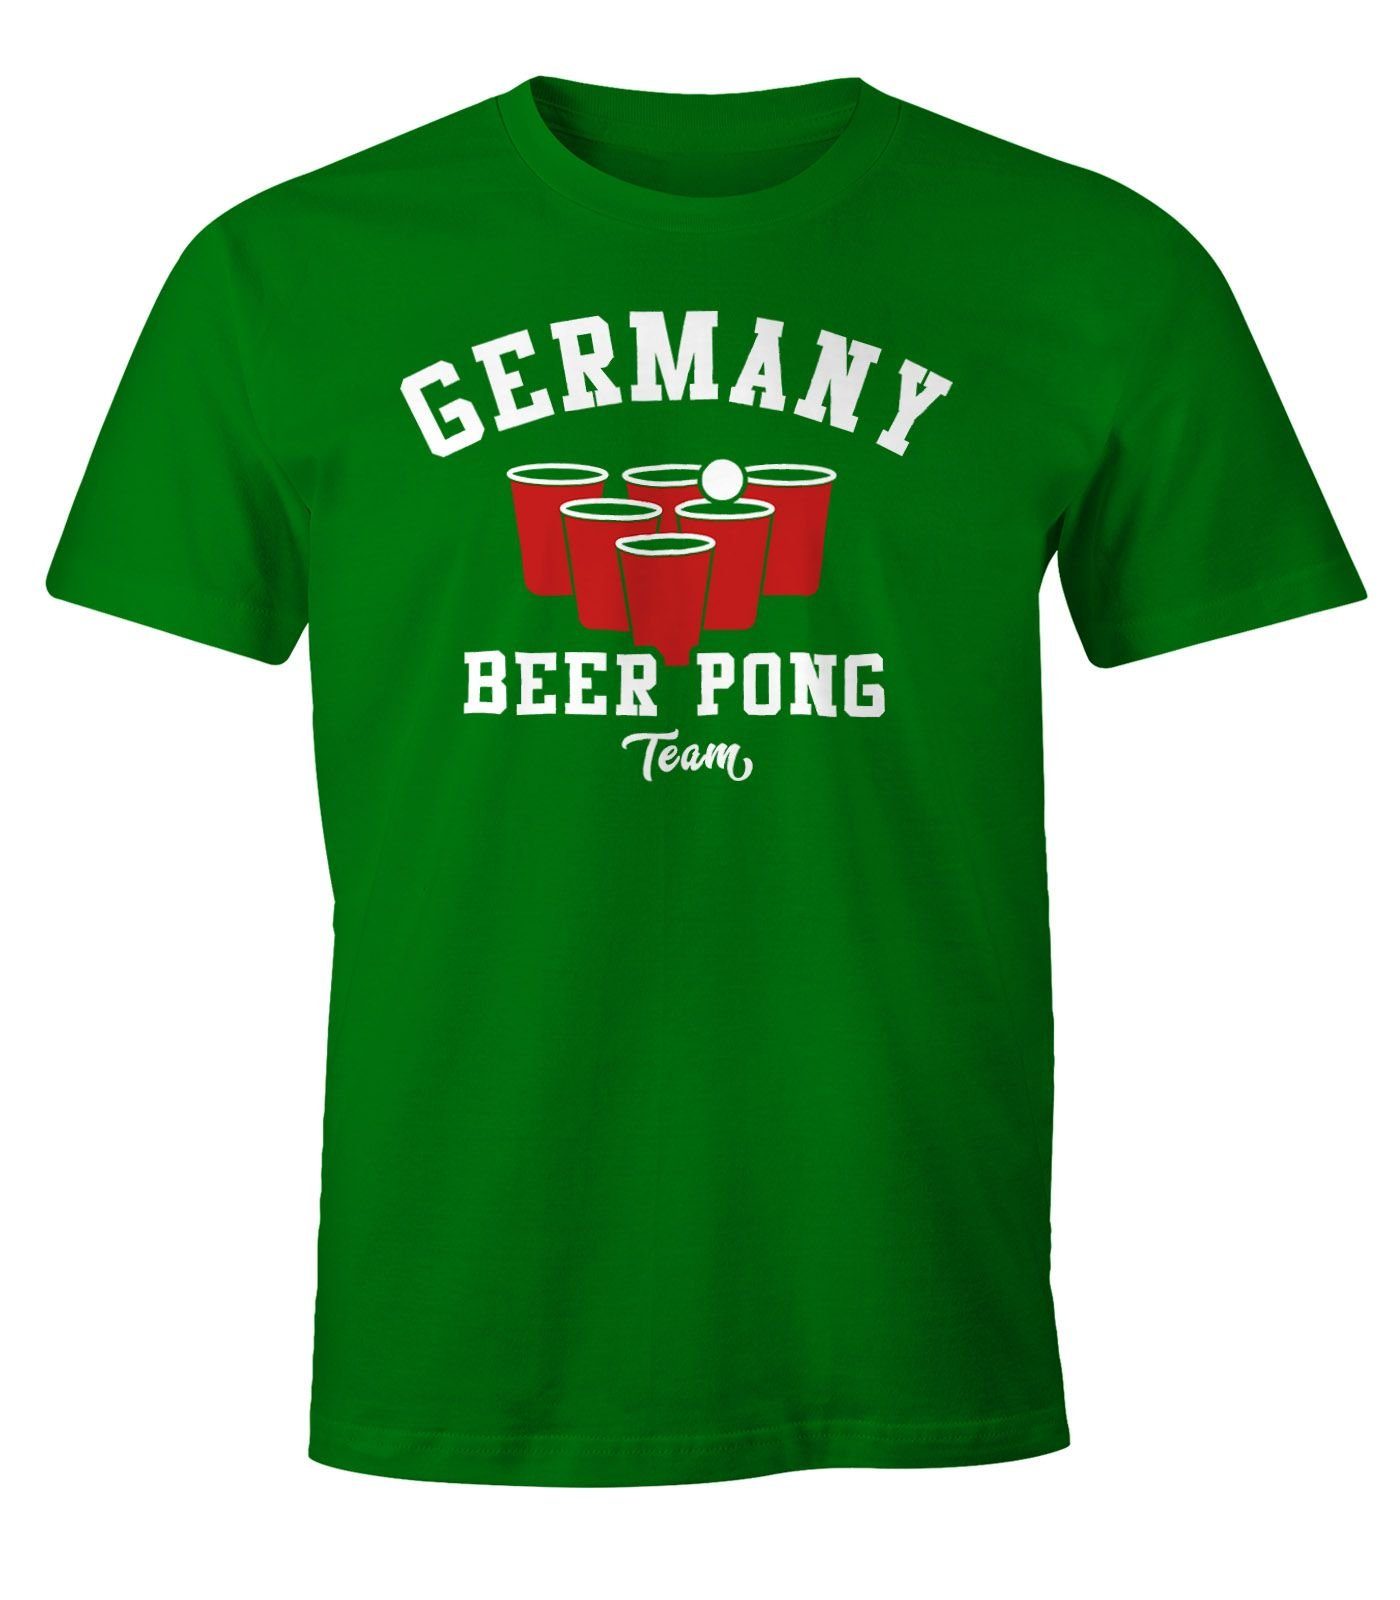 Team MoonWorks mit Beer grün Moonworks® Fun-Shirt Herren Print T-Shirt Print-Shirt Pong Bier Germany